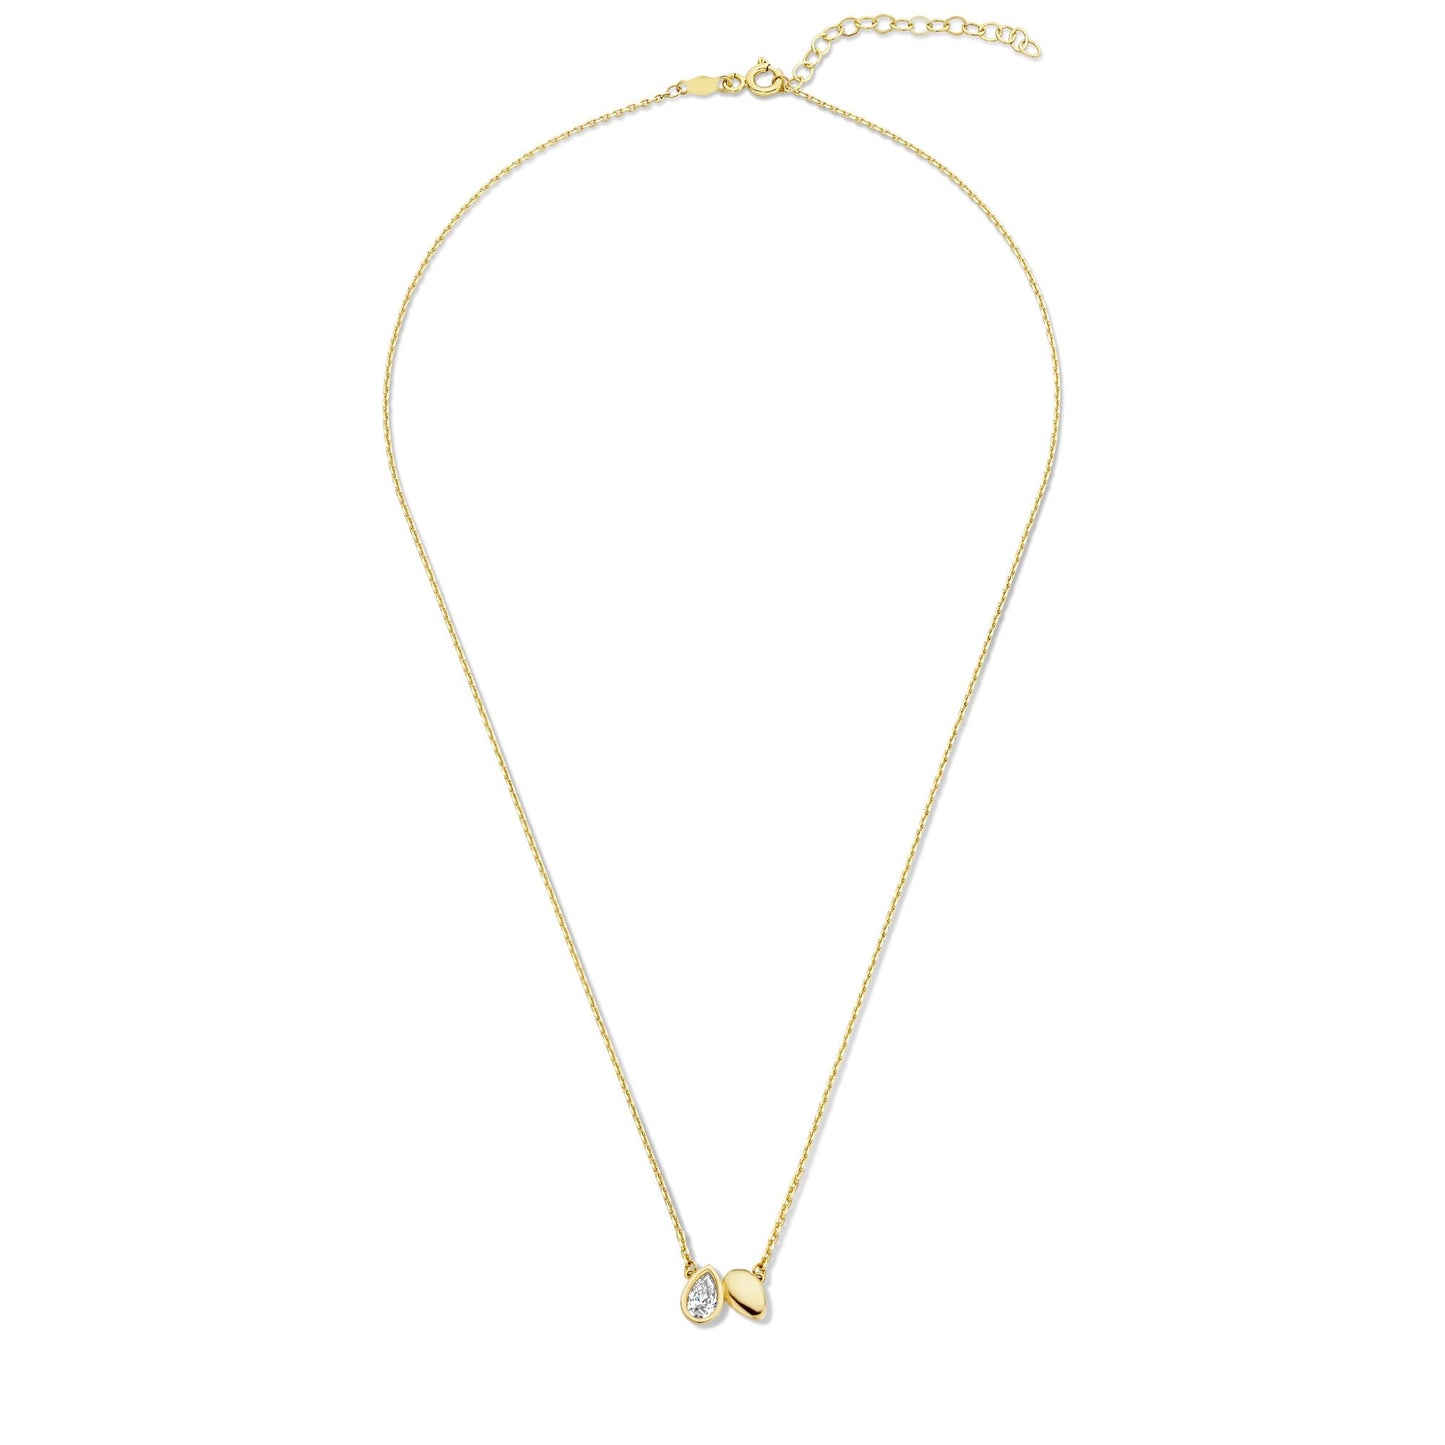 Regalo d'Amore 9 karat gold necklace and bracelet gift set with zirconia stones